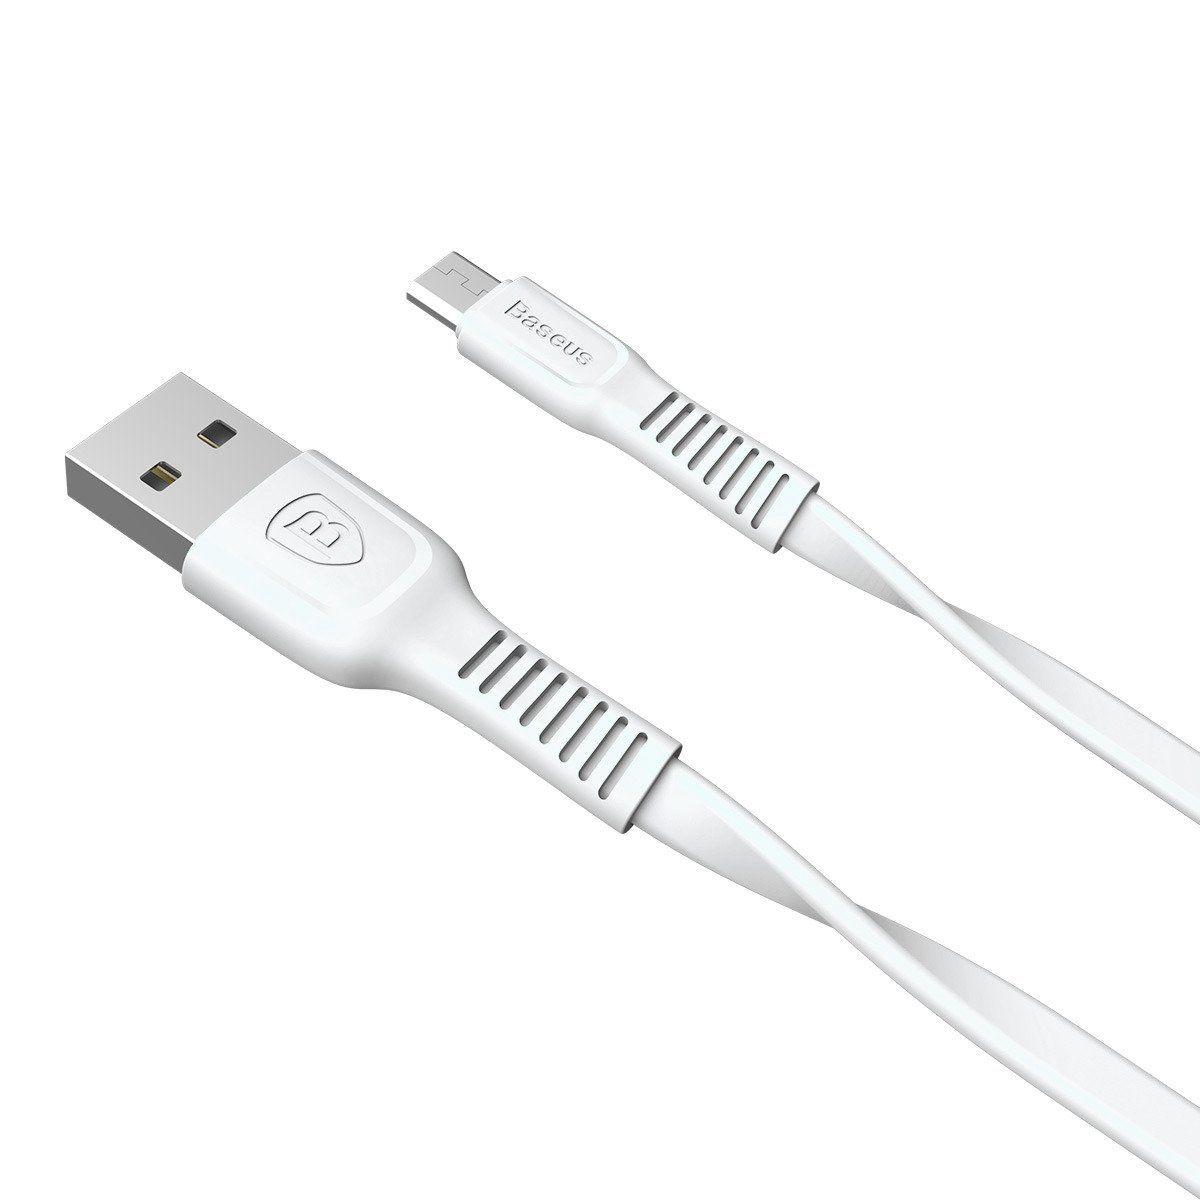 Baseus cable Tough Series typ C 2A 100cm white